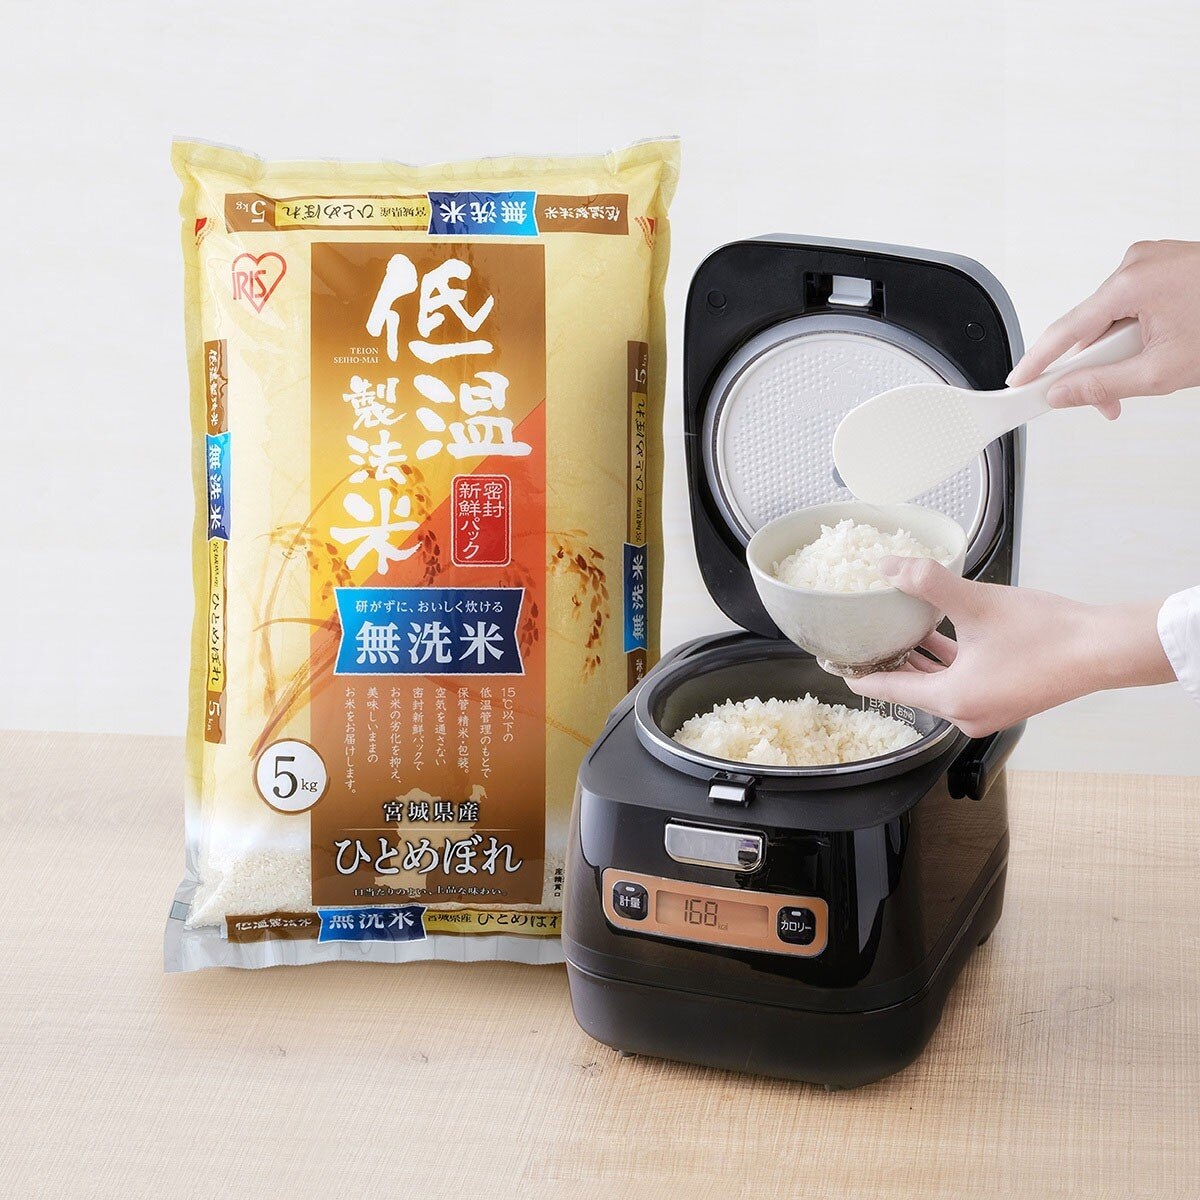 IRIS OHYAMA 低溫製法無洗米 5公斤